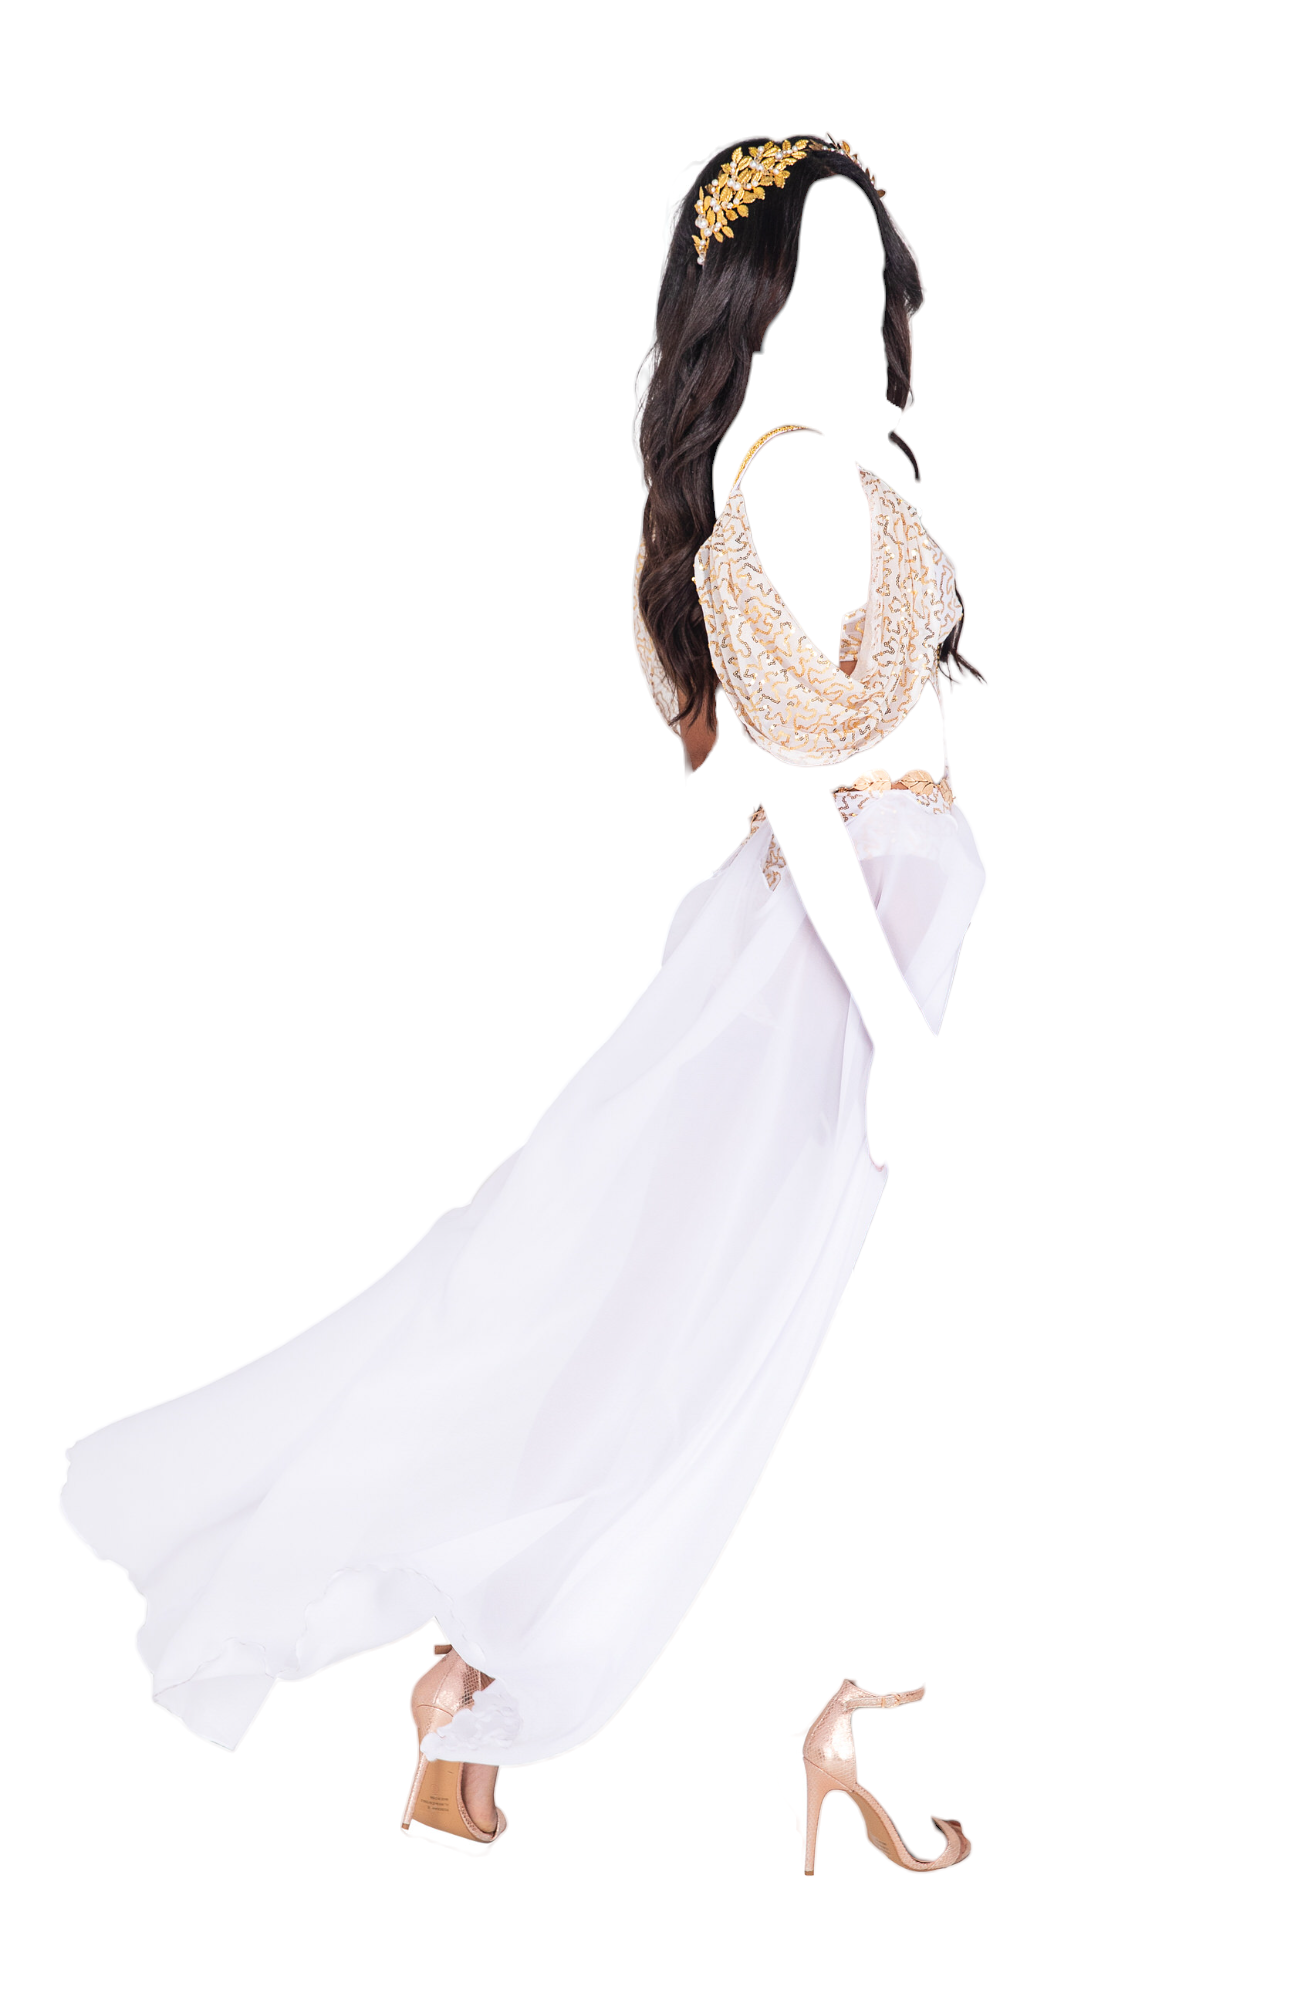 Roma Costume 2 PC Goddess Glam Bodysuit with Train White/Gold